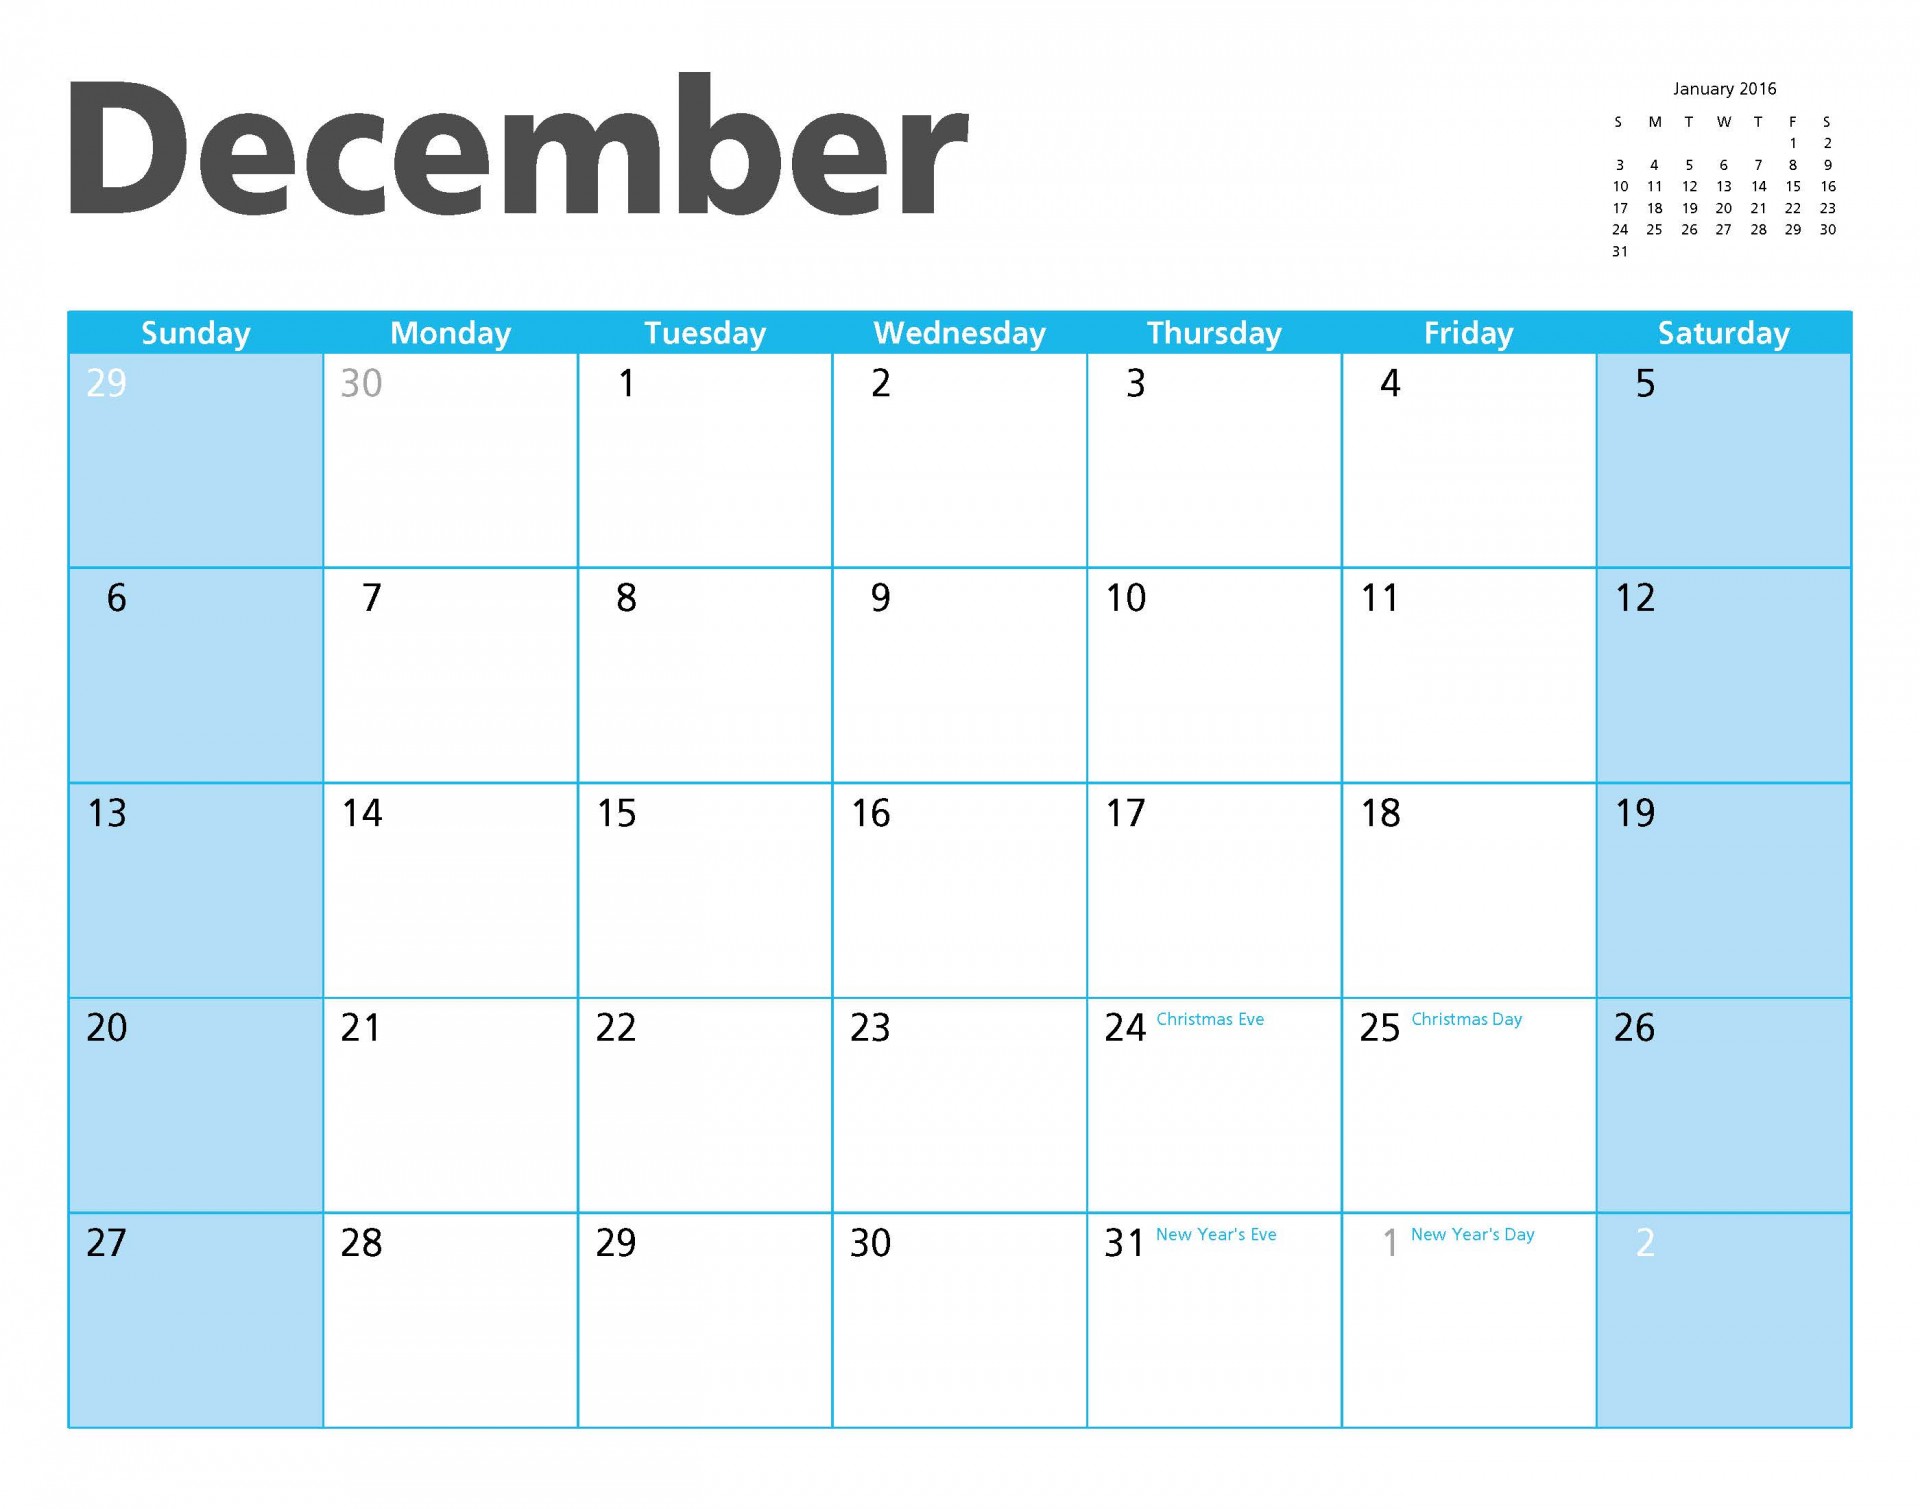 December 2015 Calendar Page - I really appreciate your premium download!